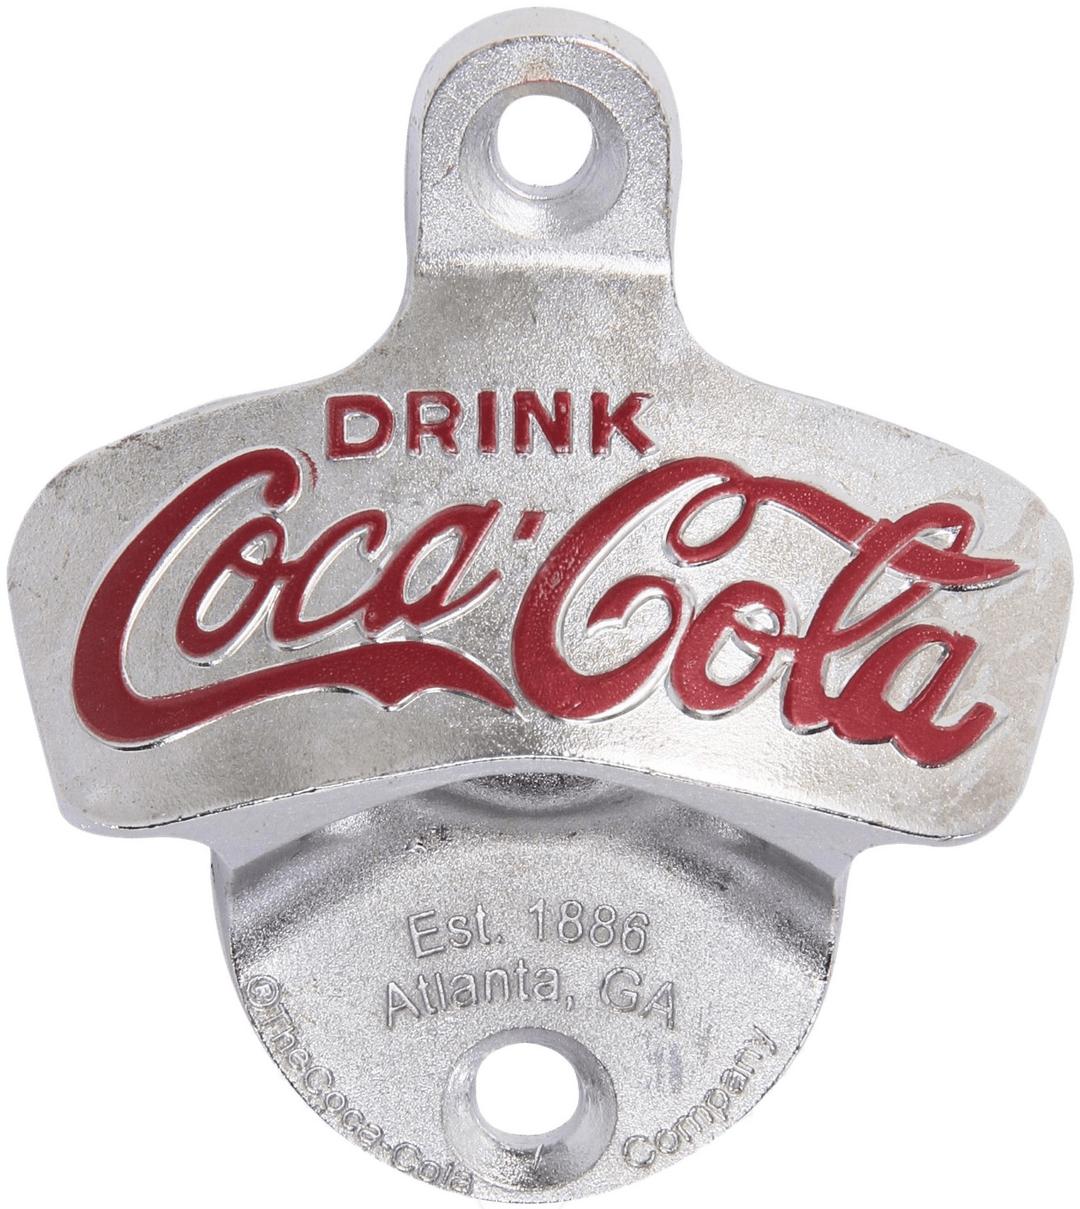 Coca Cola Wall Mount Bottle Opener png transparent